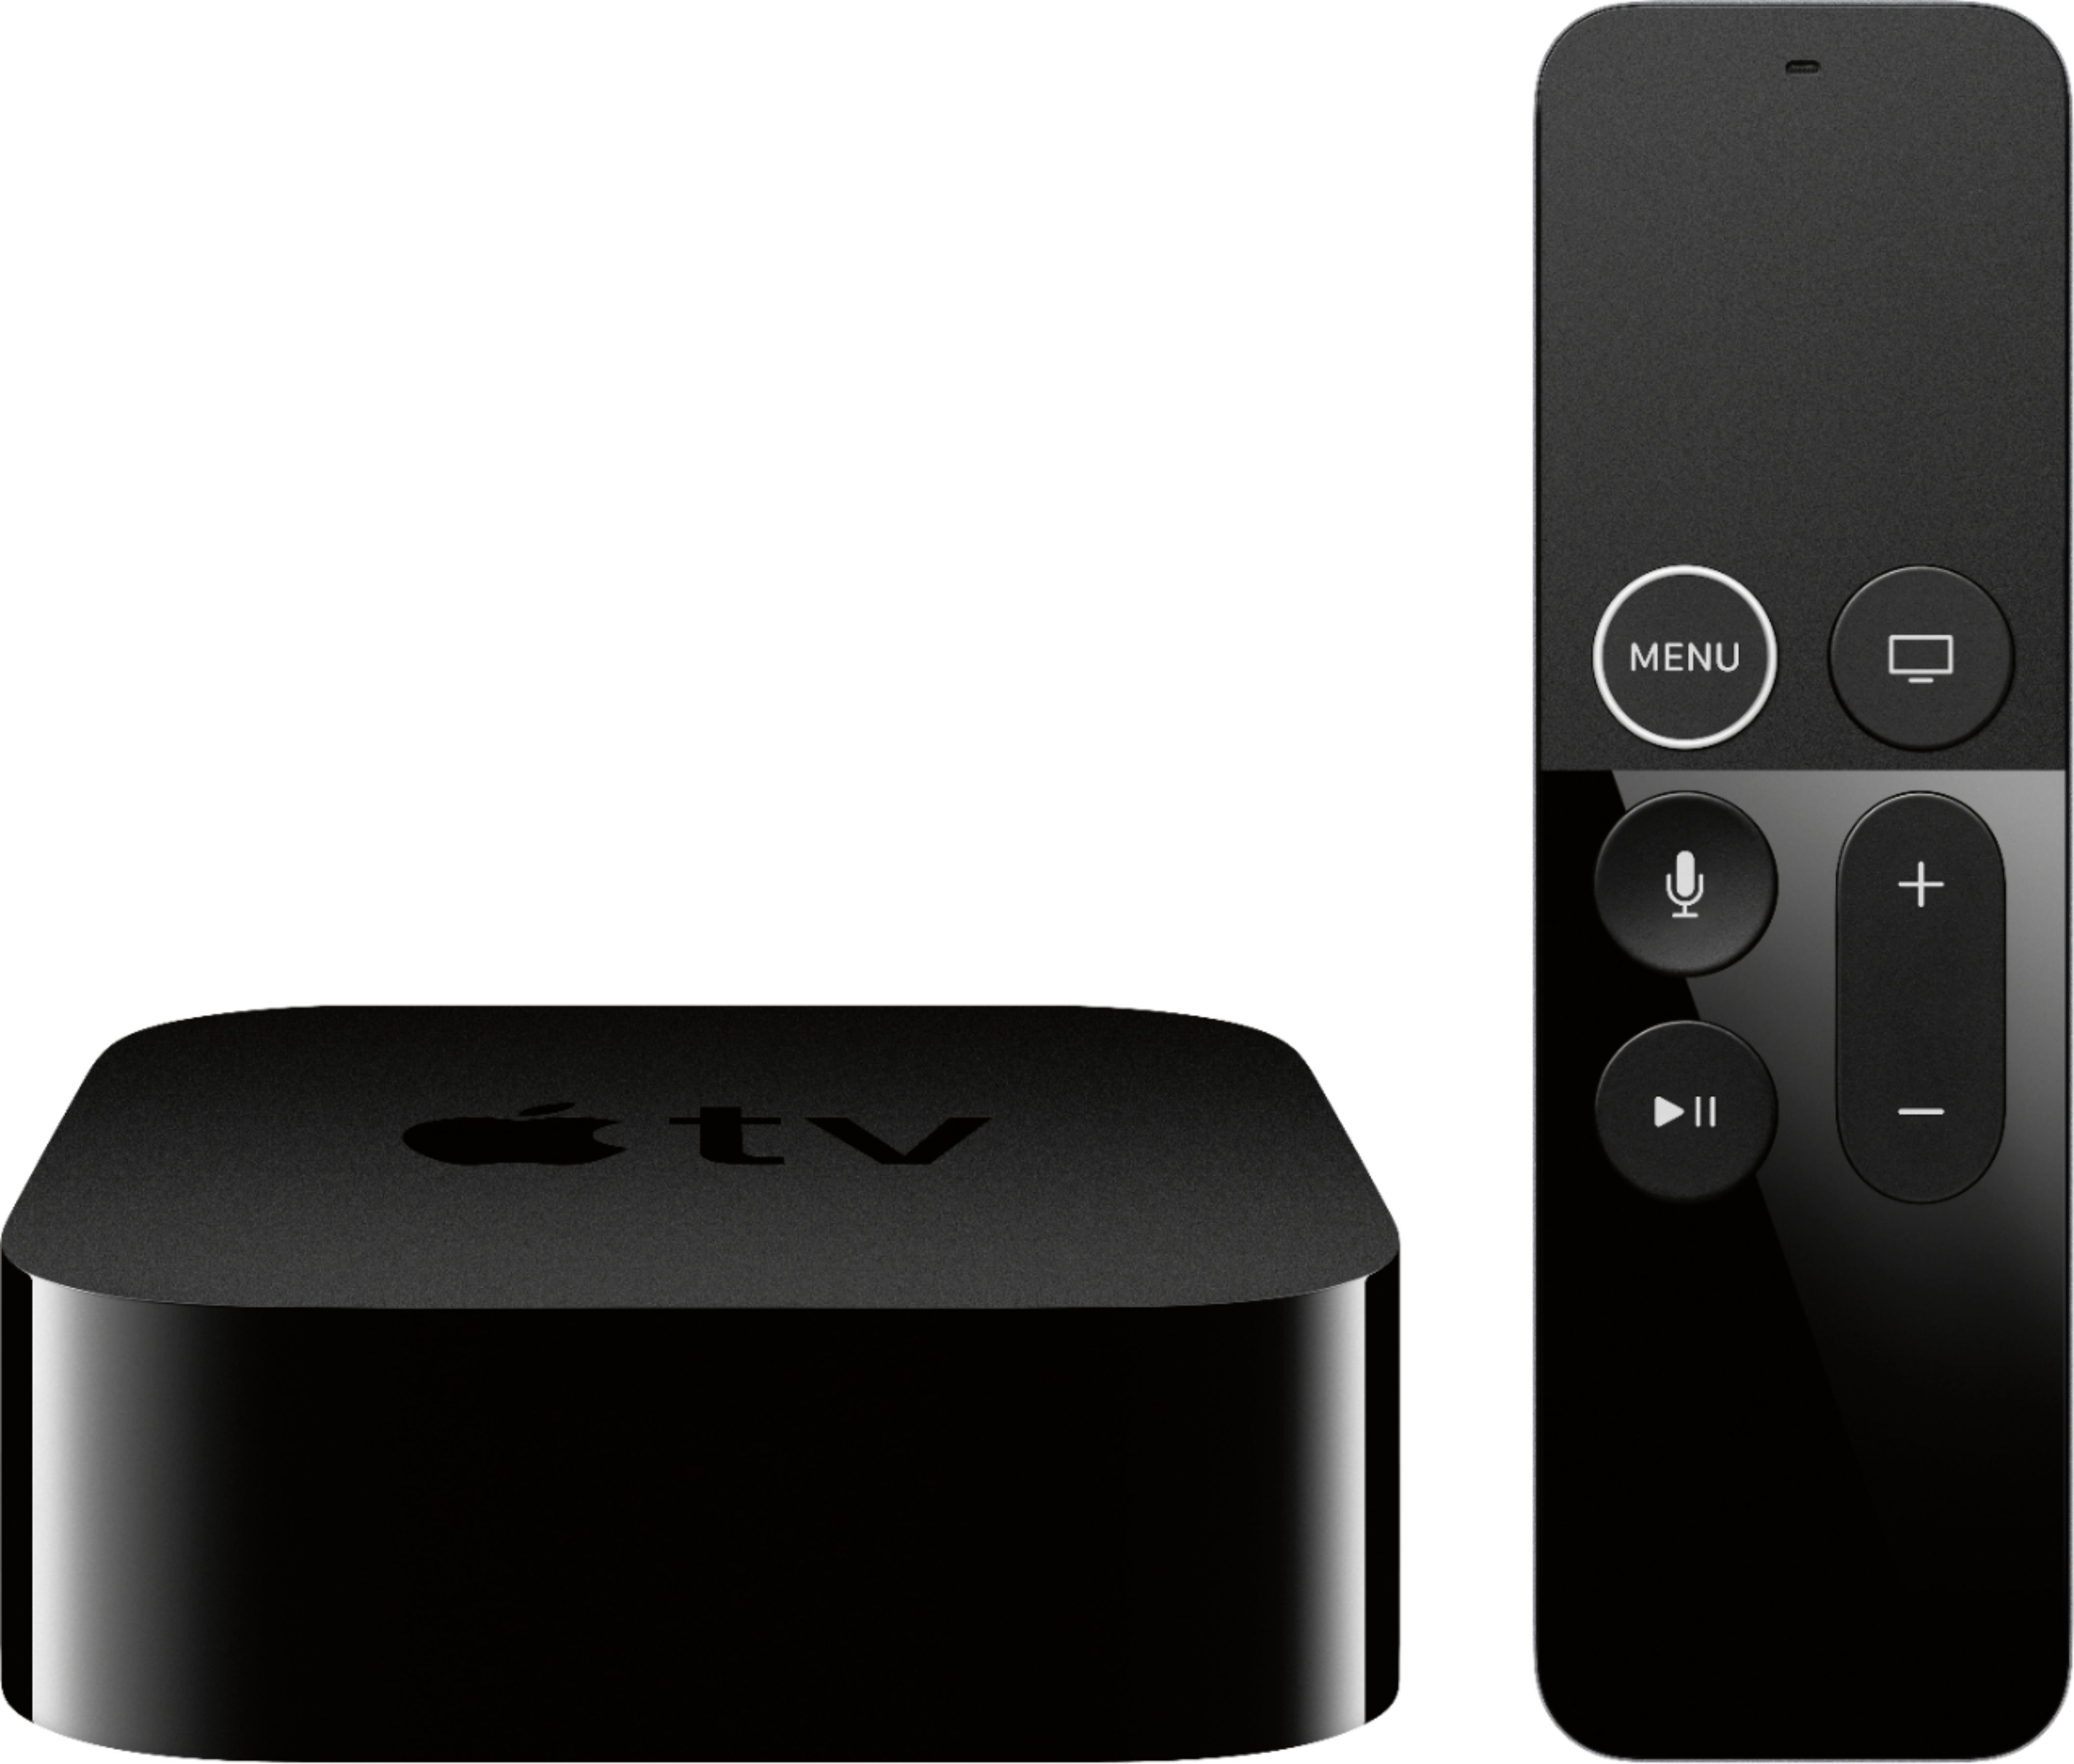 Apple TV HD 32GB Black MR912LL/A - Best Buy | Best Buy U.S.